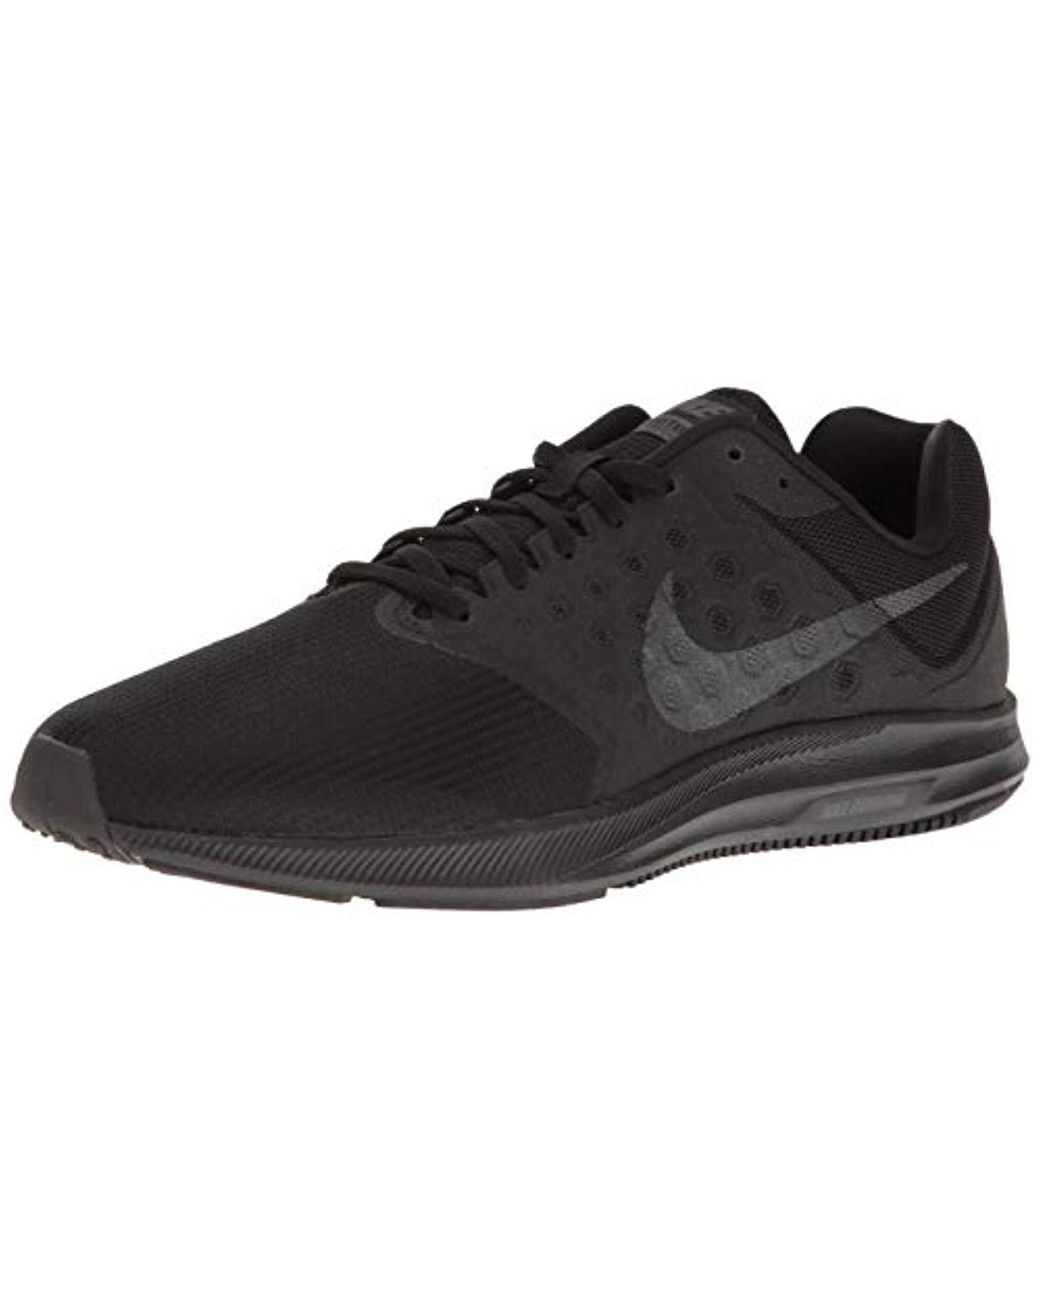 Nike Downshifter 7 Running Shoes in Black for Men | Lyst UK